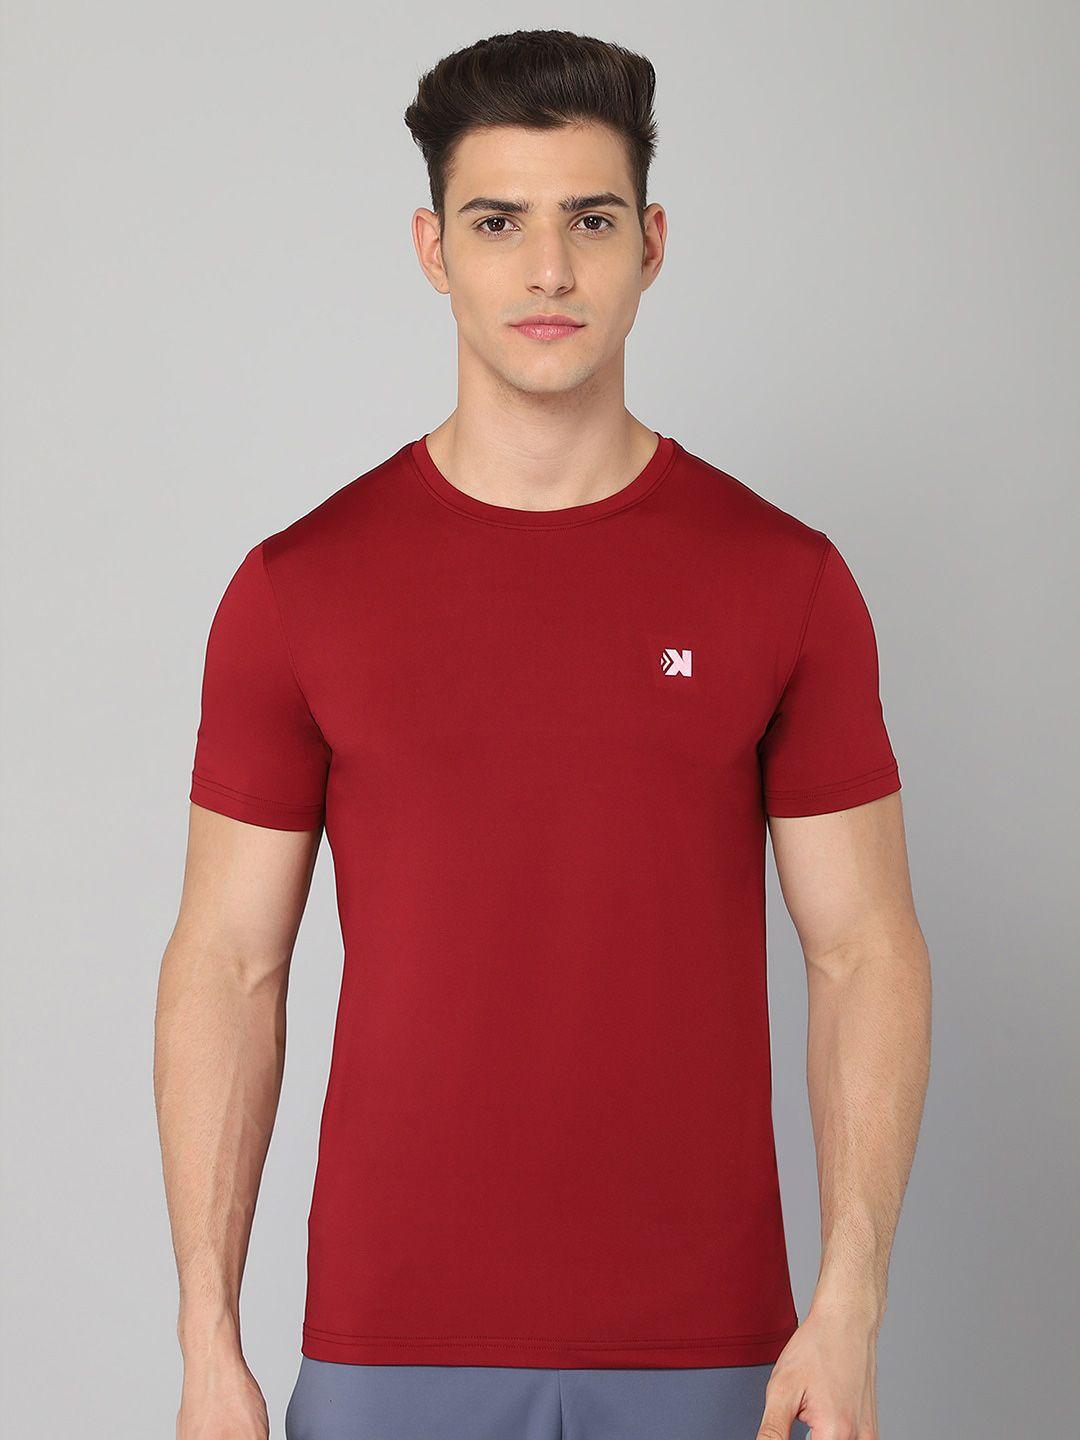 jackdanza men maroon t-shirt